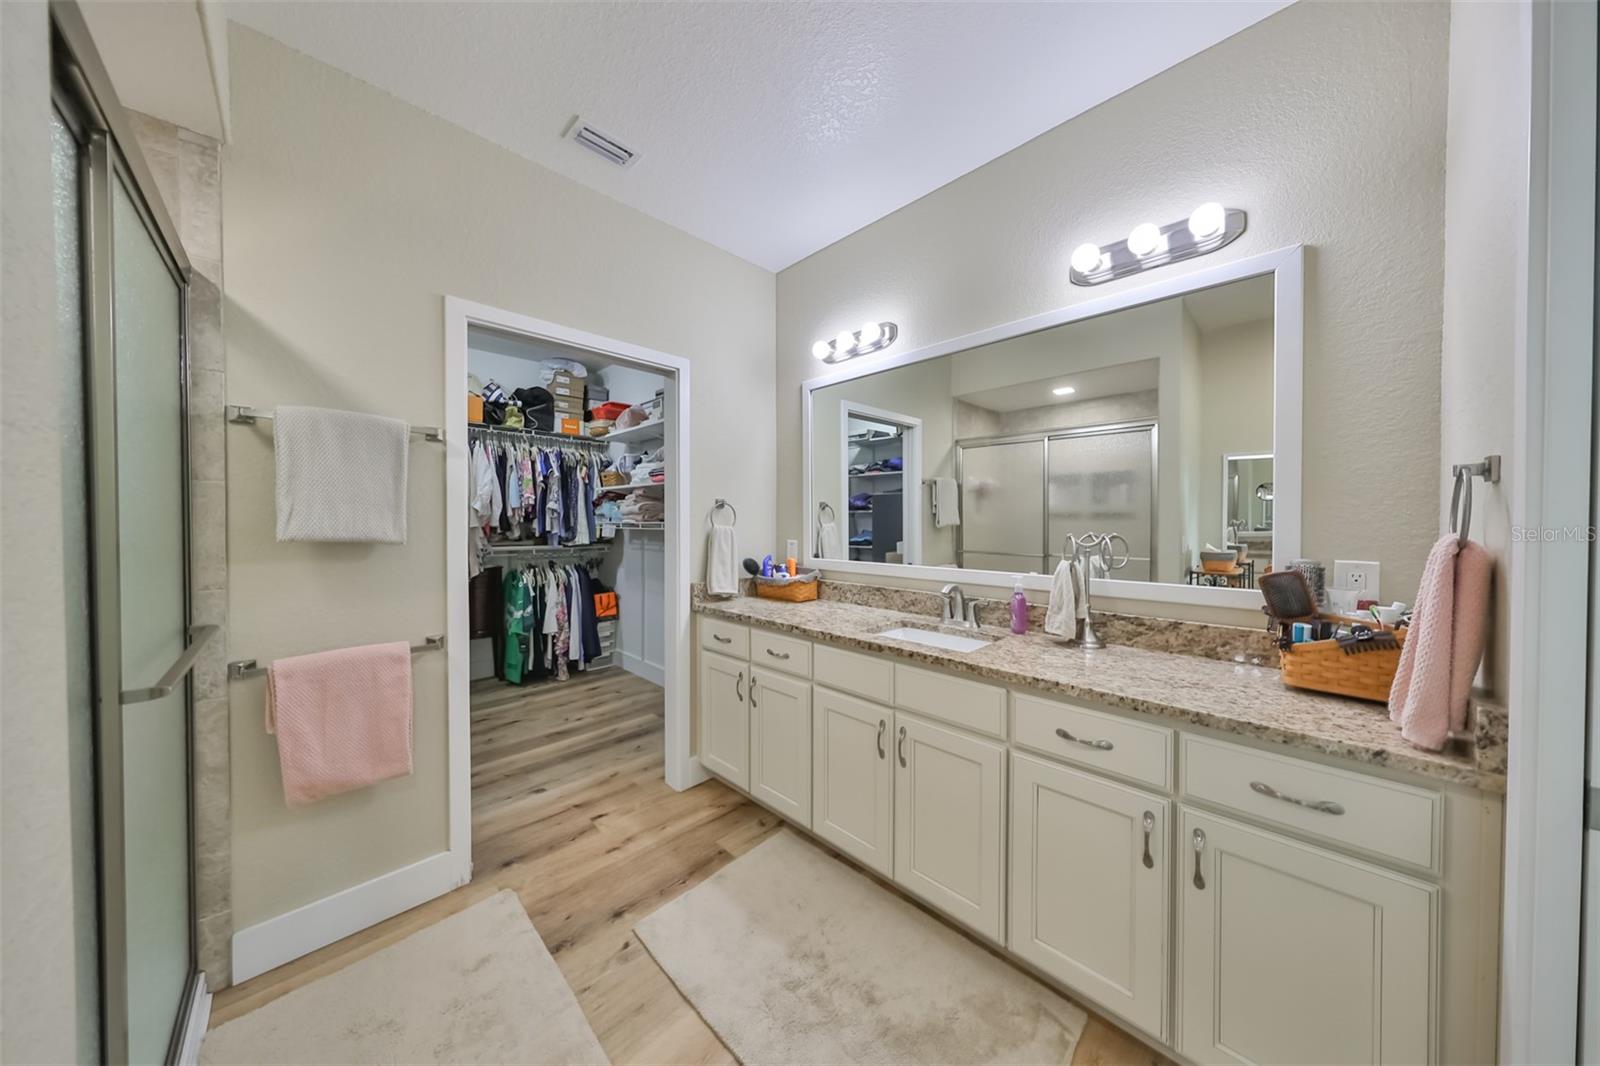 This en-suite bathroom has large walk-in shower, granite counters, modern fixtures and oversized ensuite walk-in closet room.